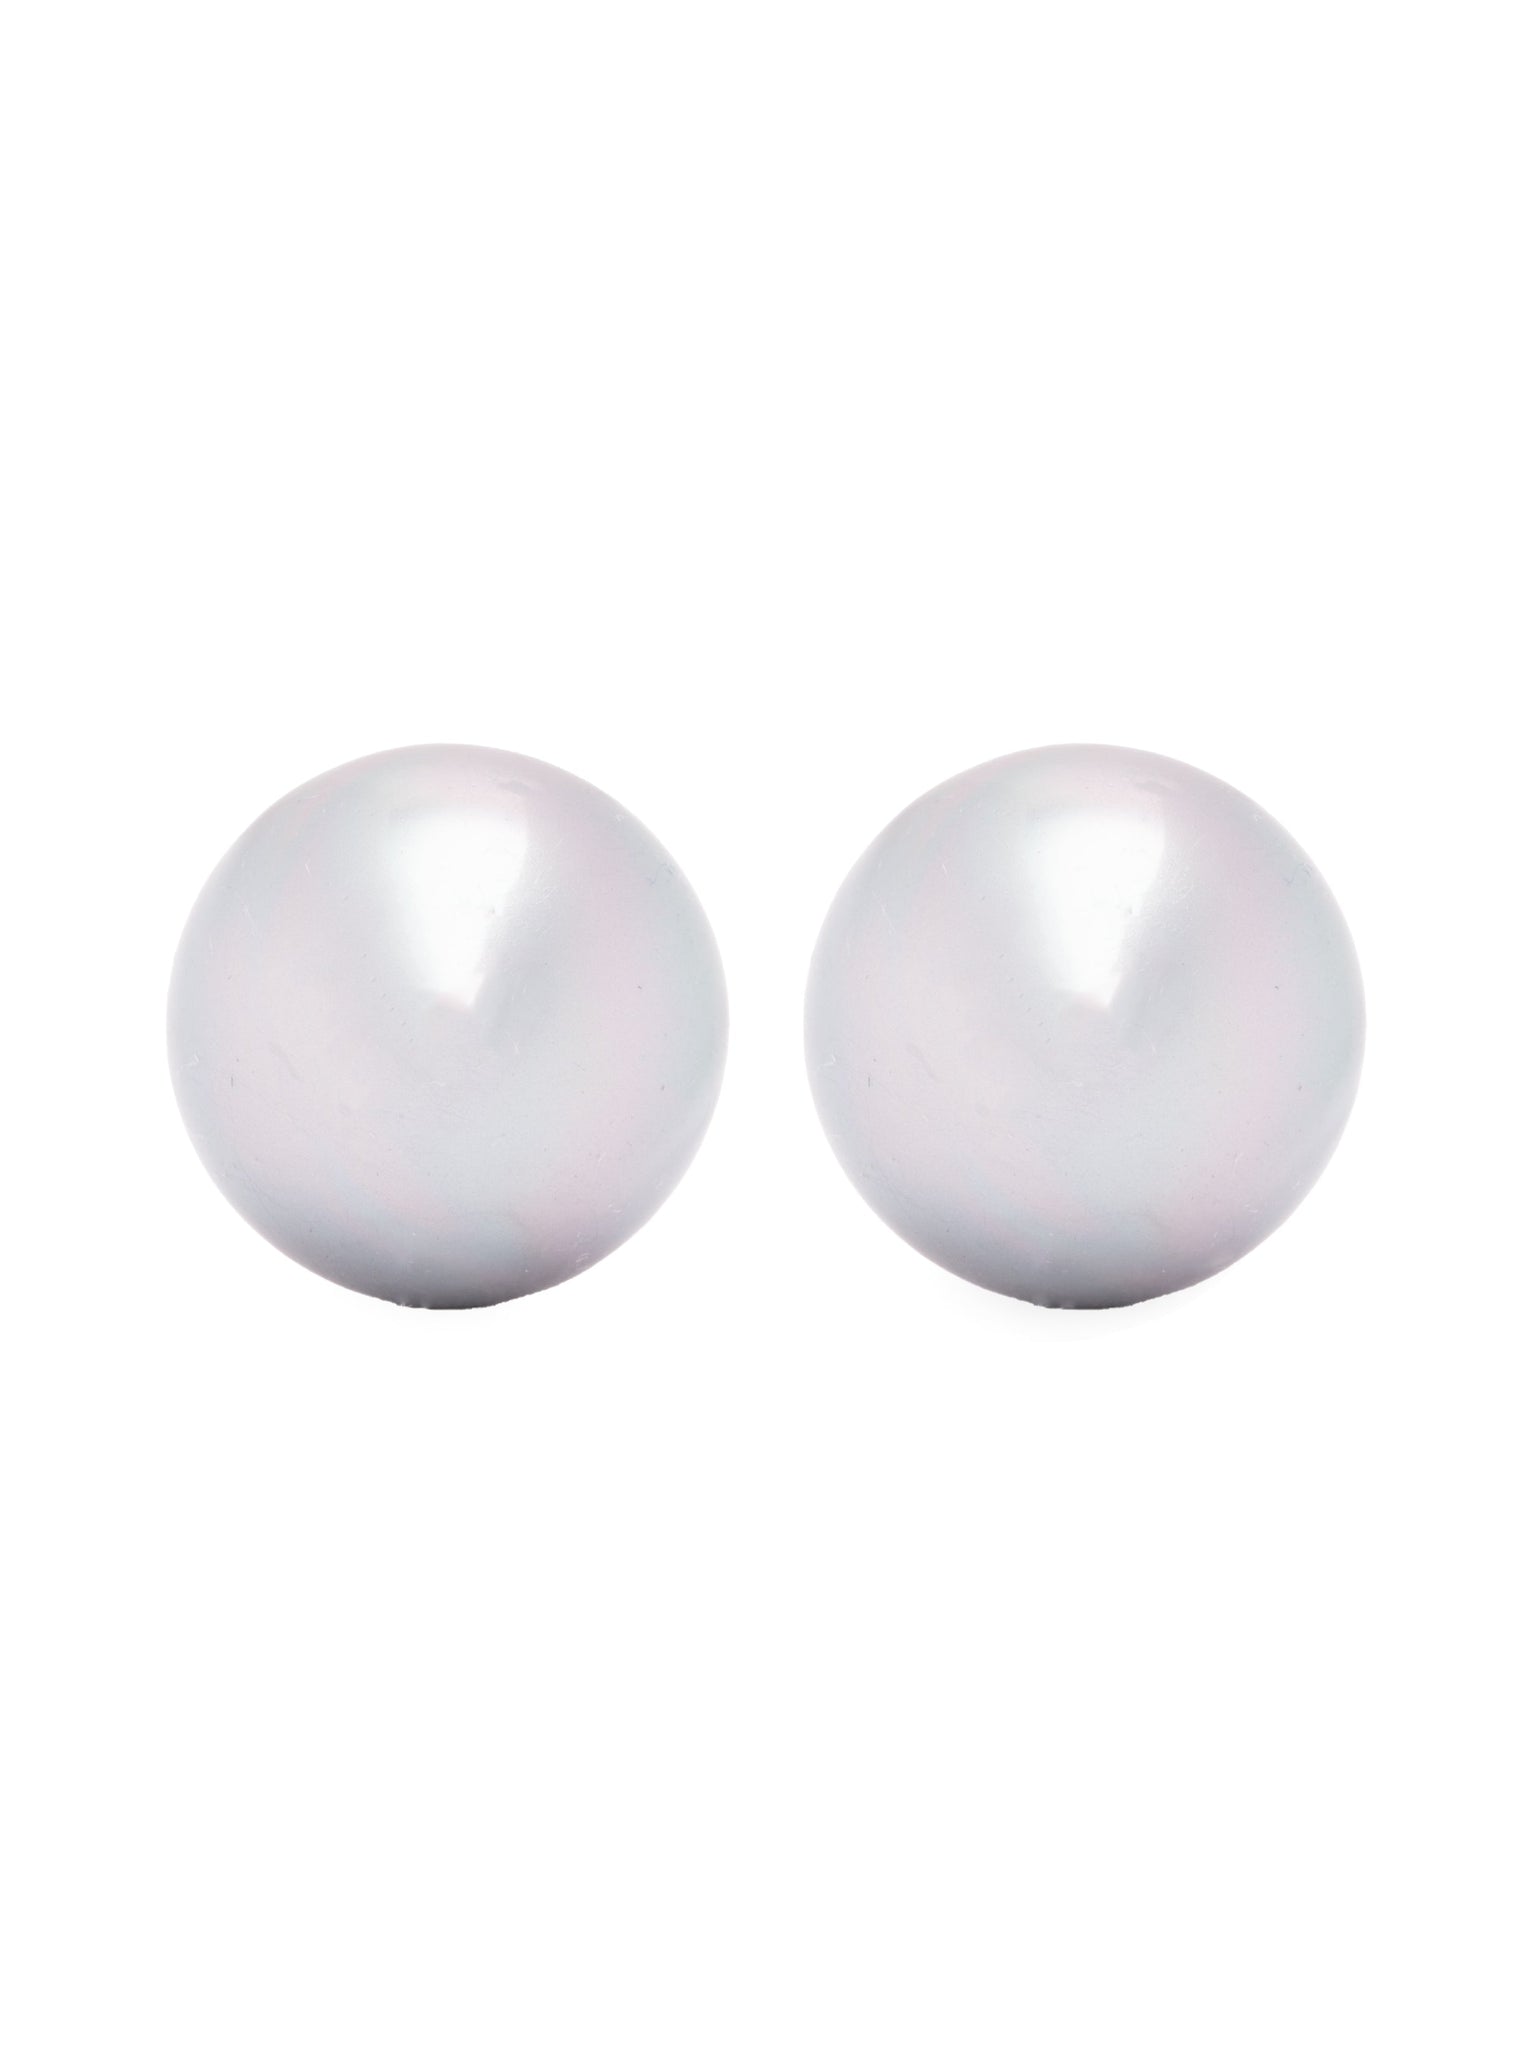 The Pearl Story - Mystic Grey Pearl Earrings 